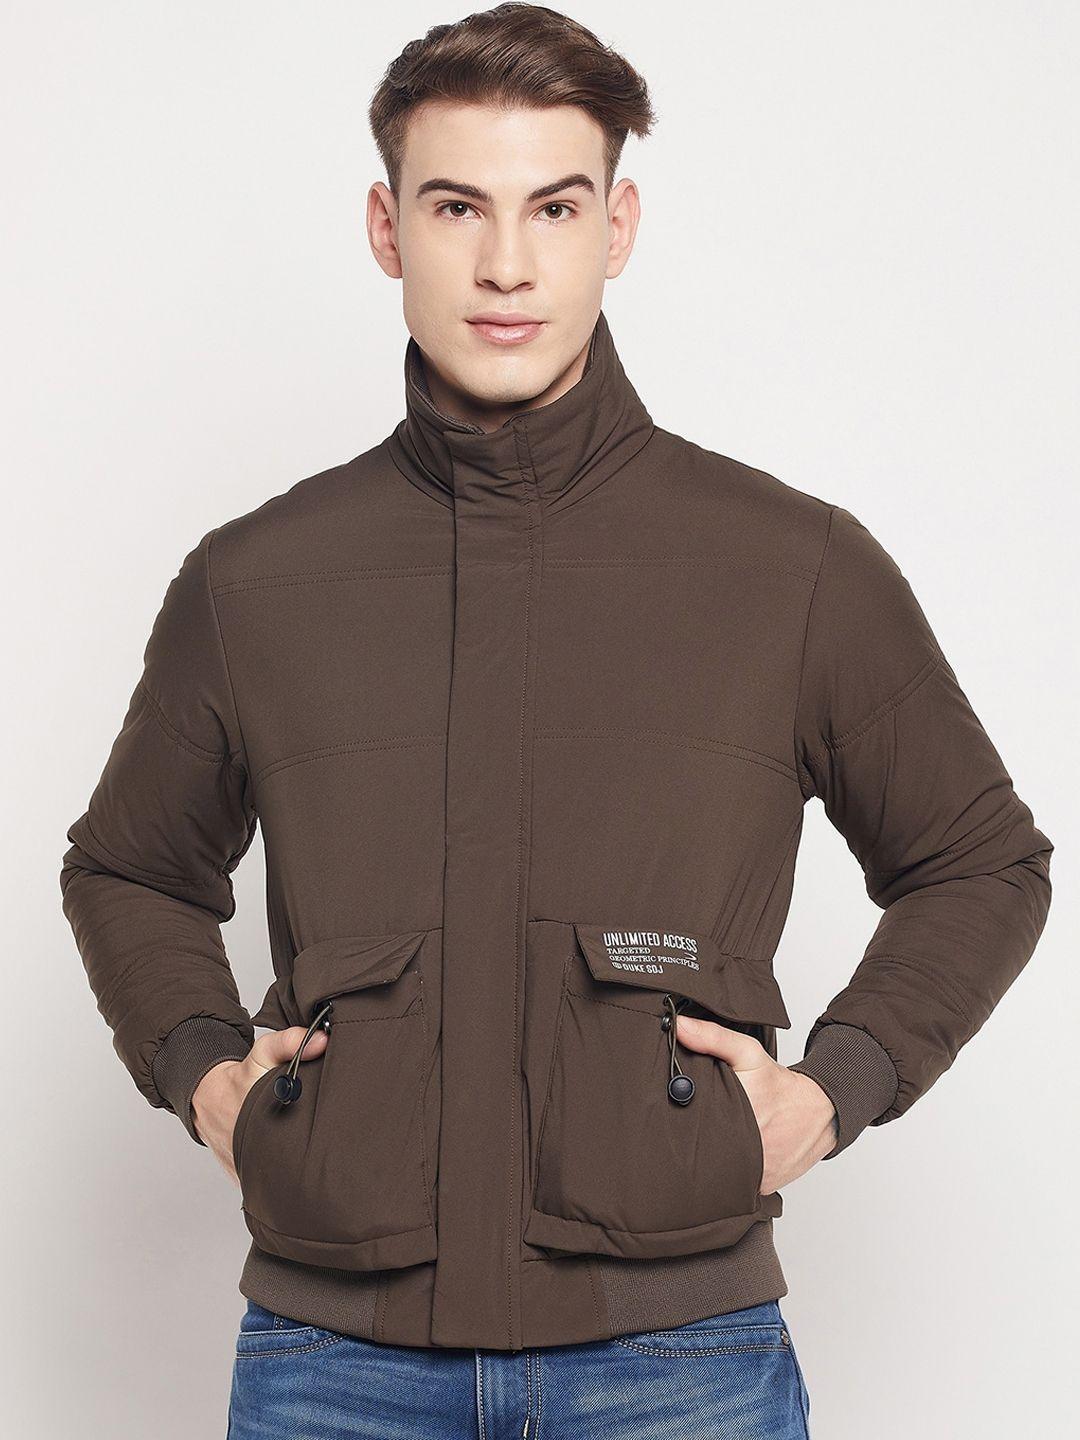 duke-men-brown-solid-mock-collar-bomber-jacket